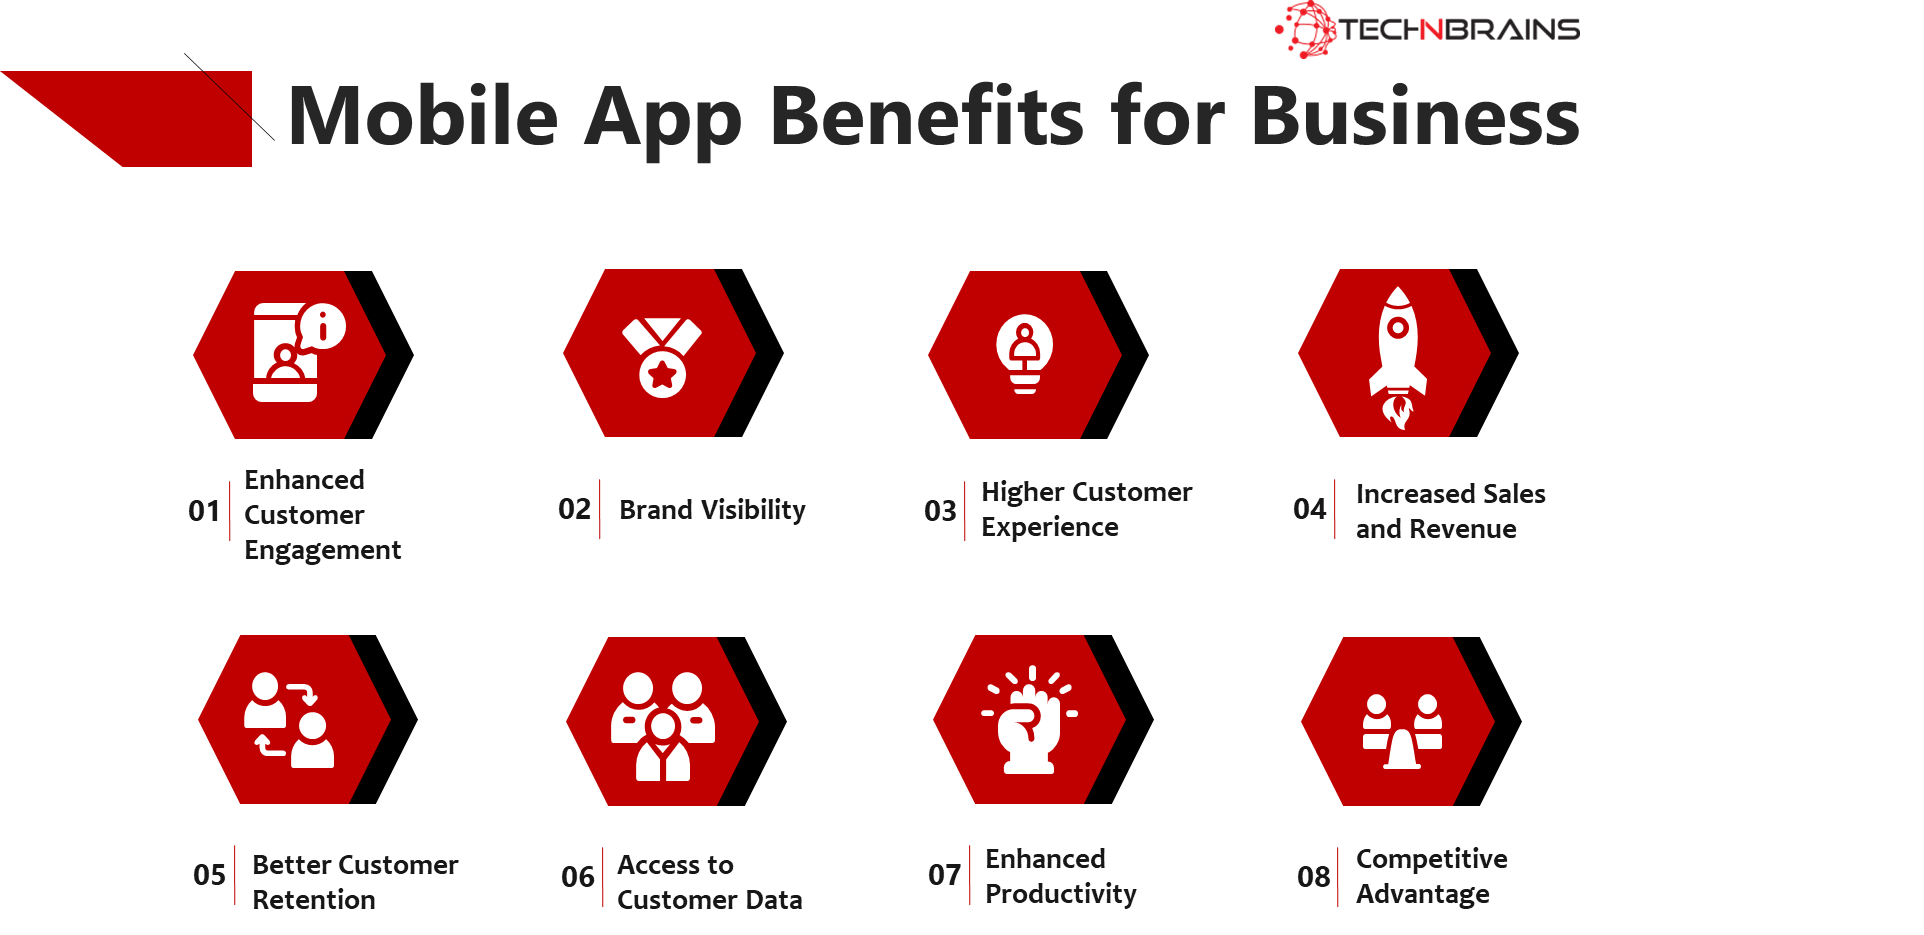 Mobile App Benefits for Business - technbrains